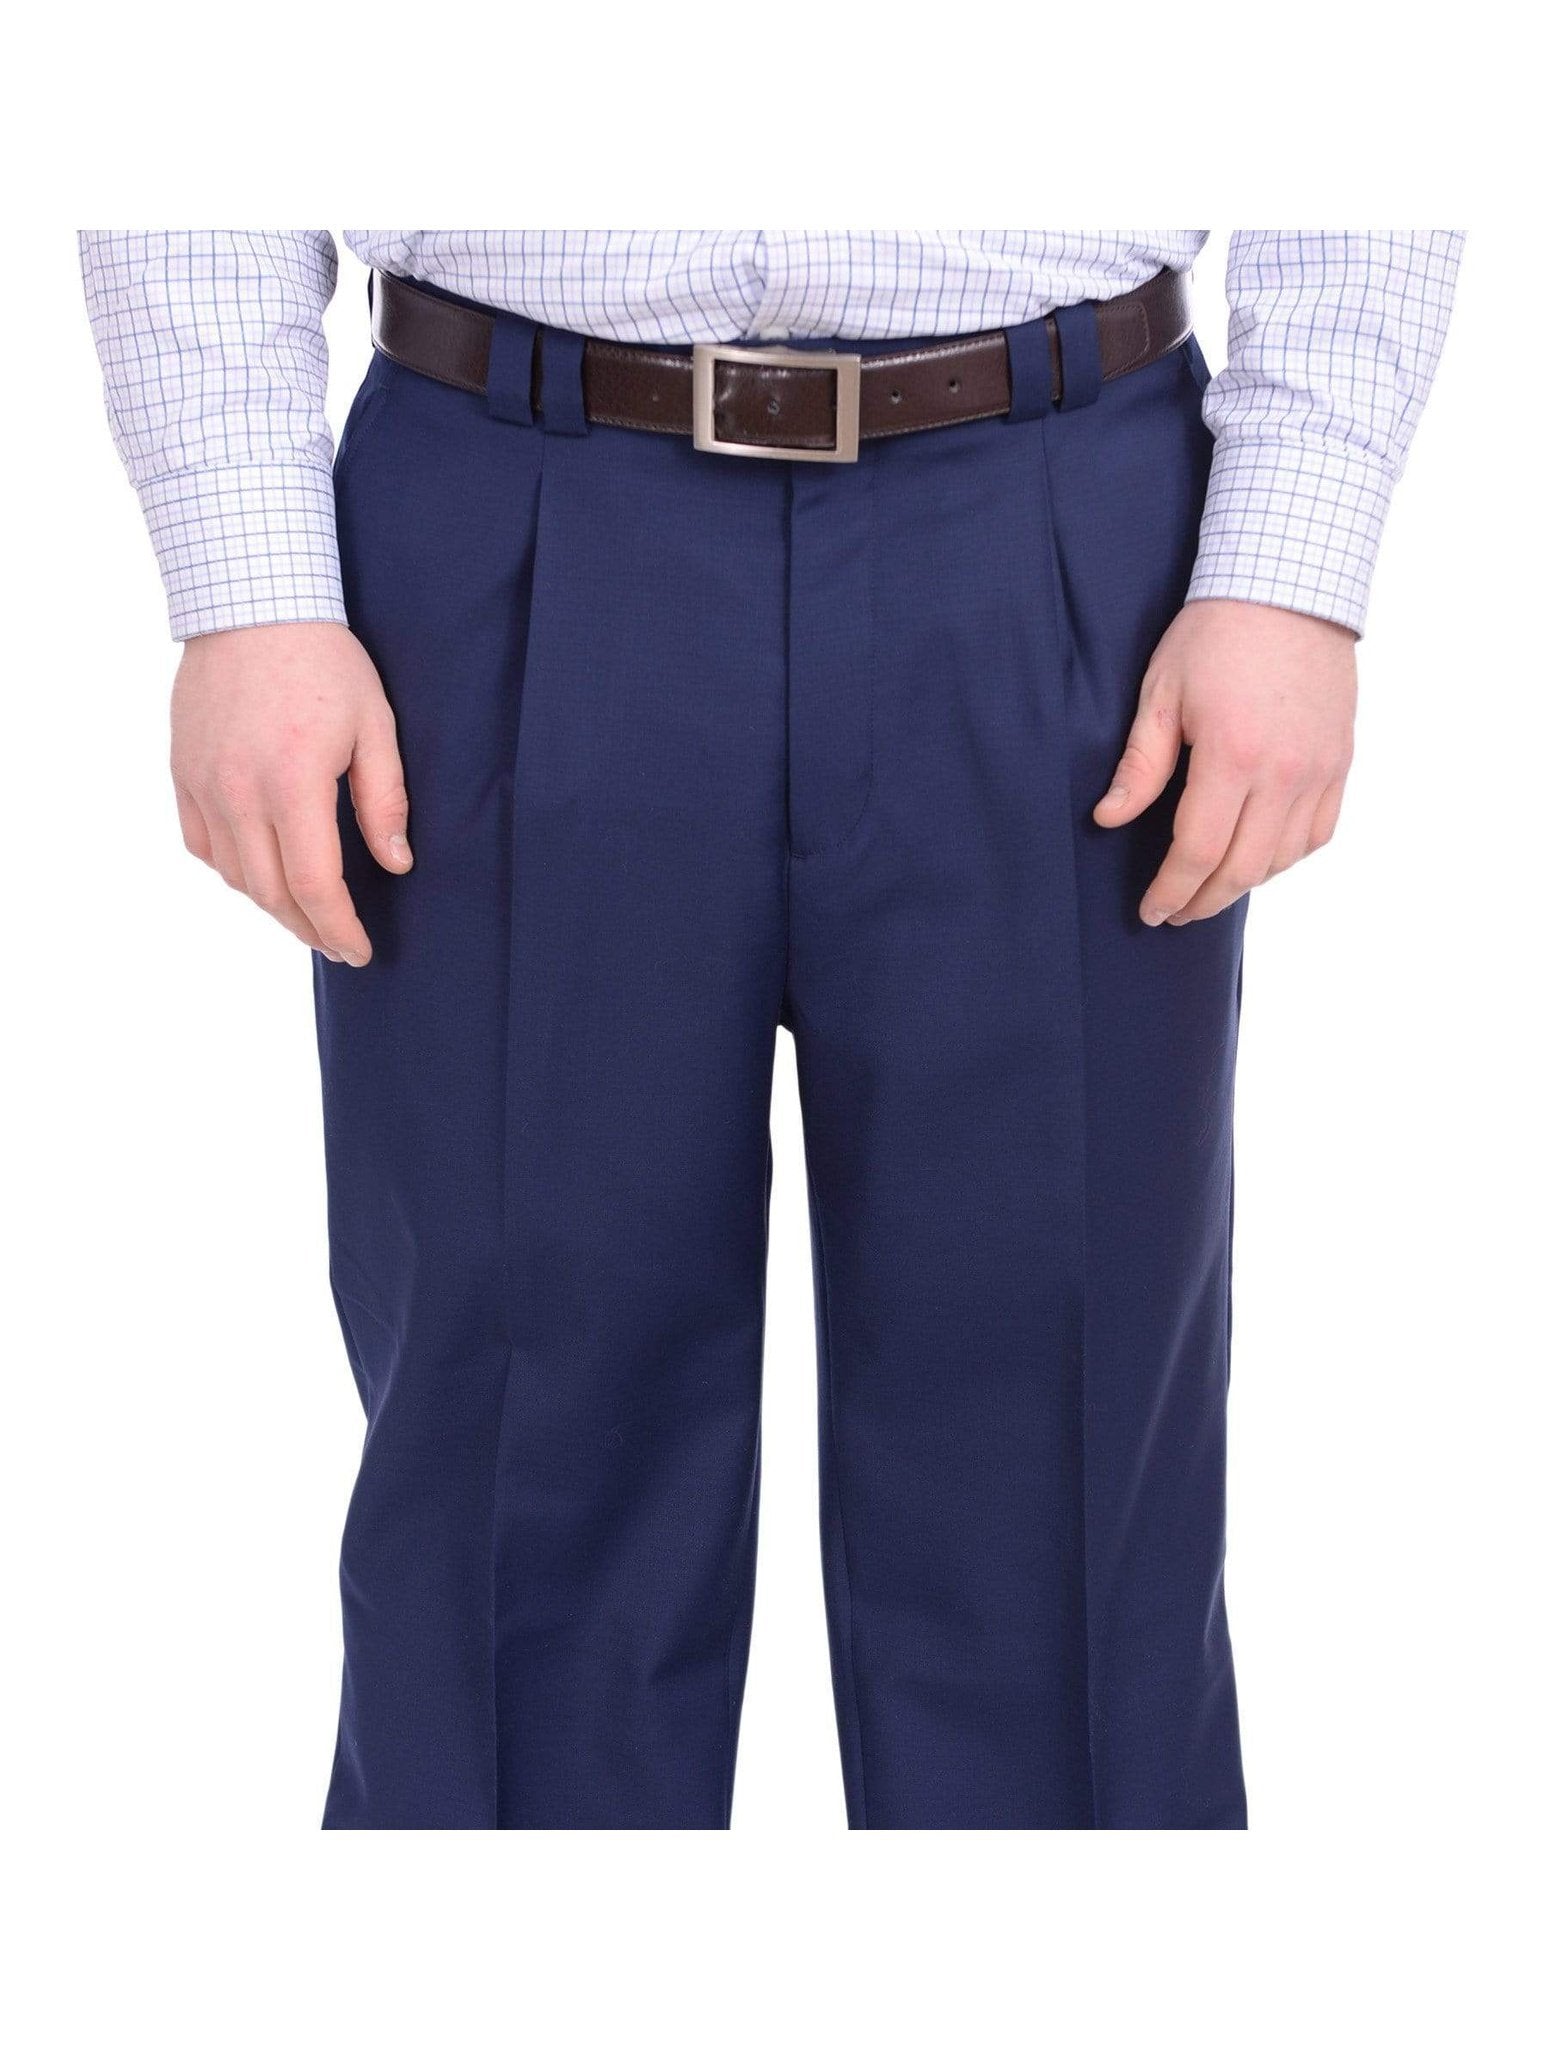 Buy Men Navy Solid Slim Fit Formal Trousers Online - 601842 | Peter England